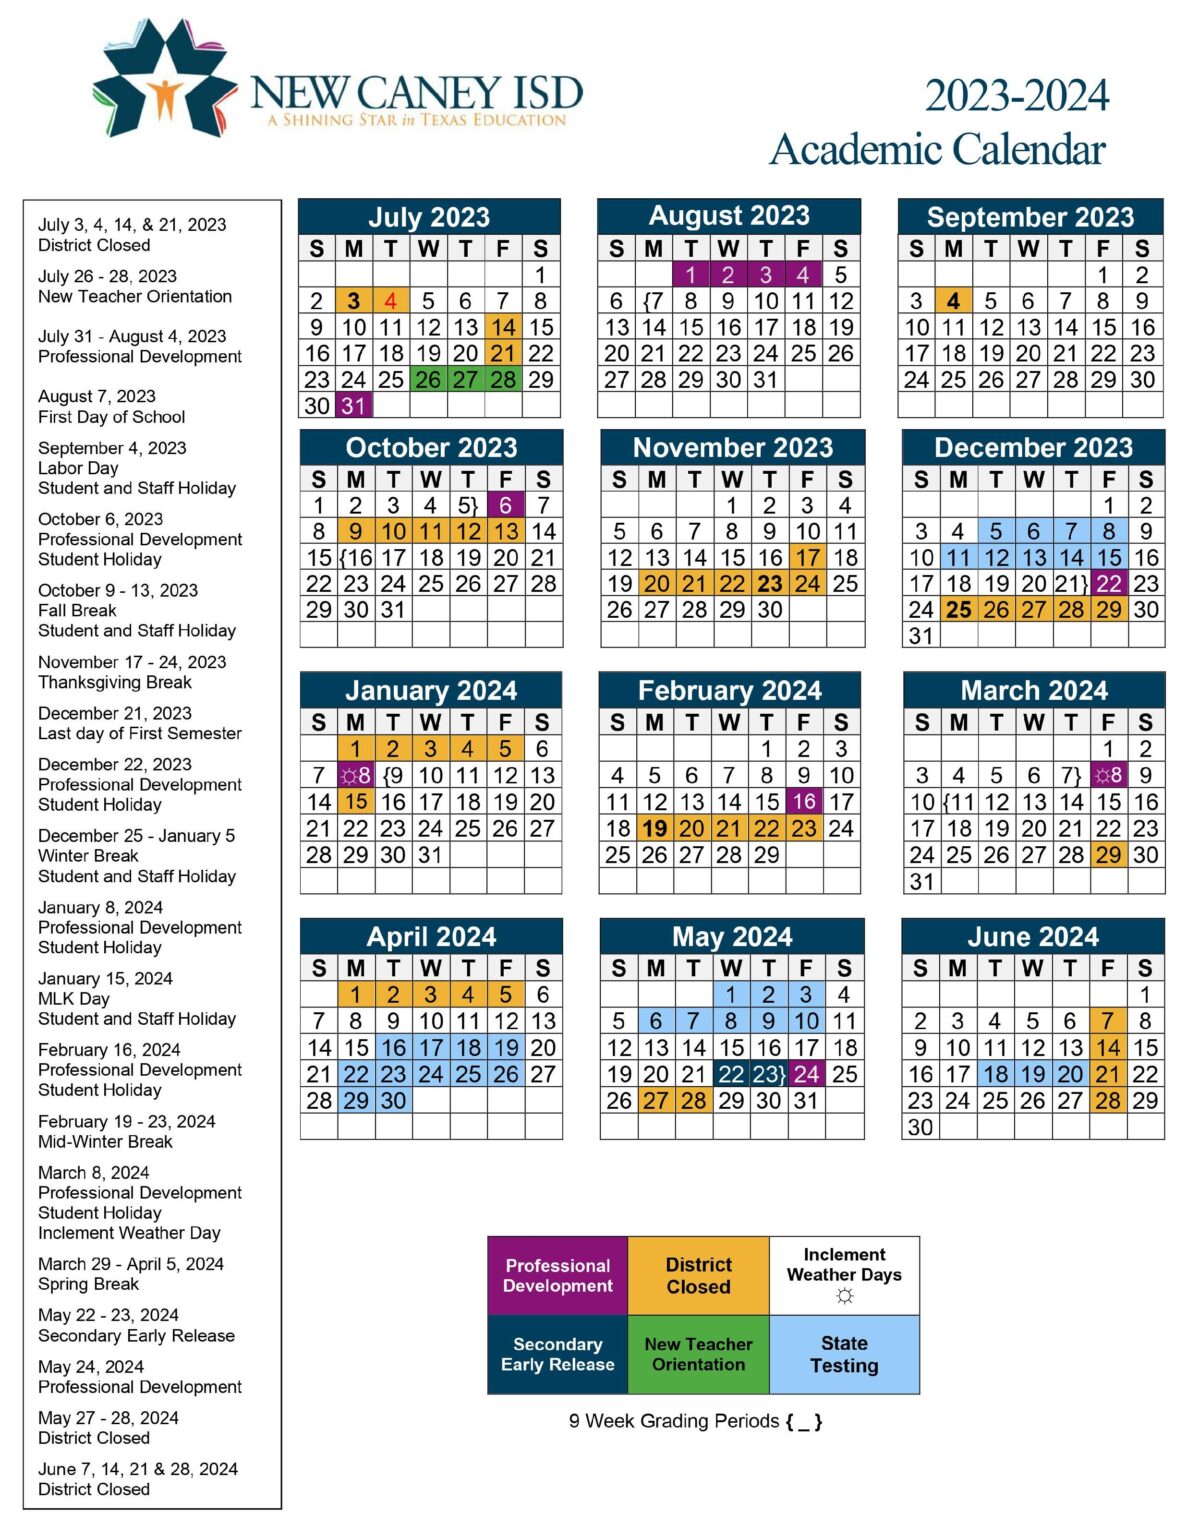 New Caney Independent School District Calendar 20232024 PDF